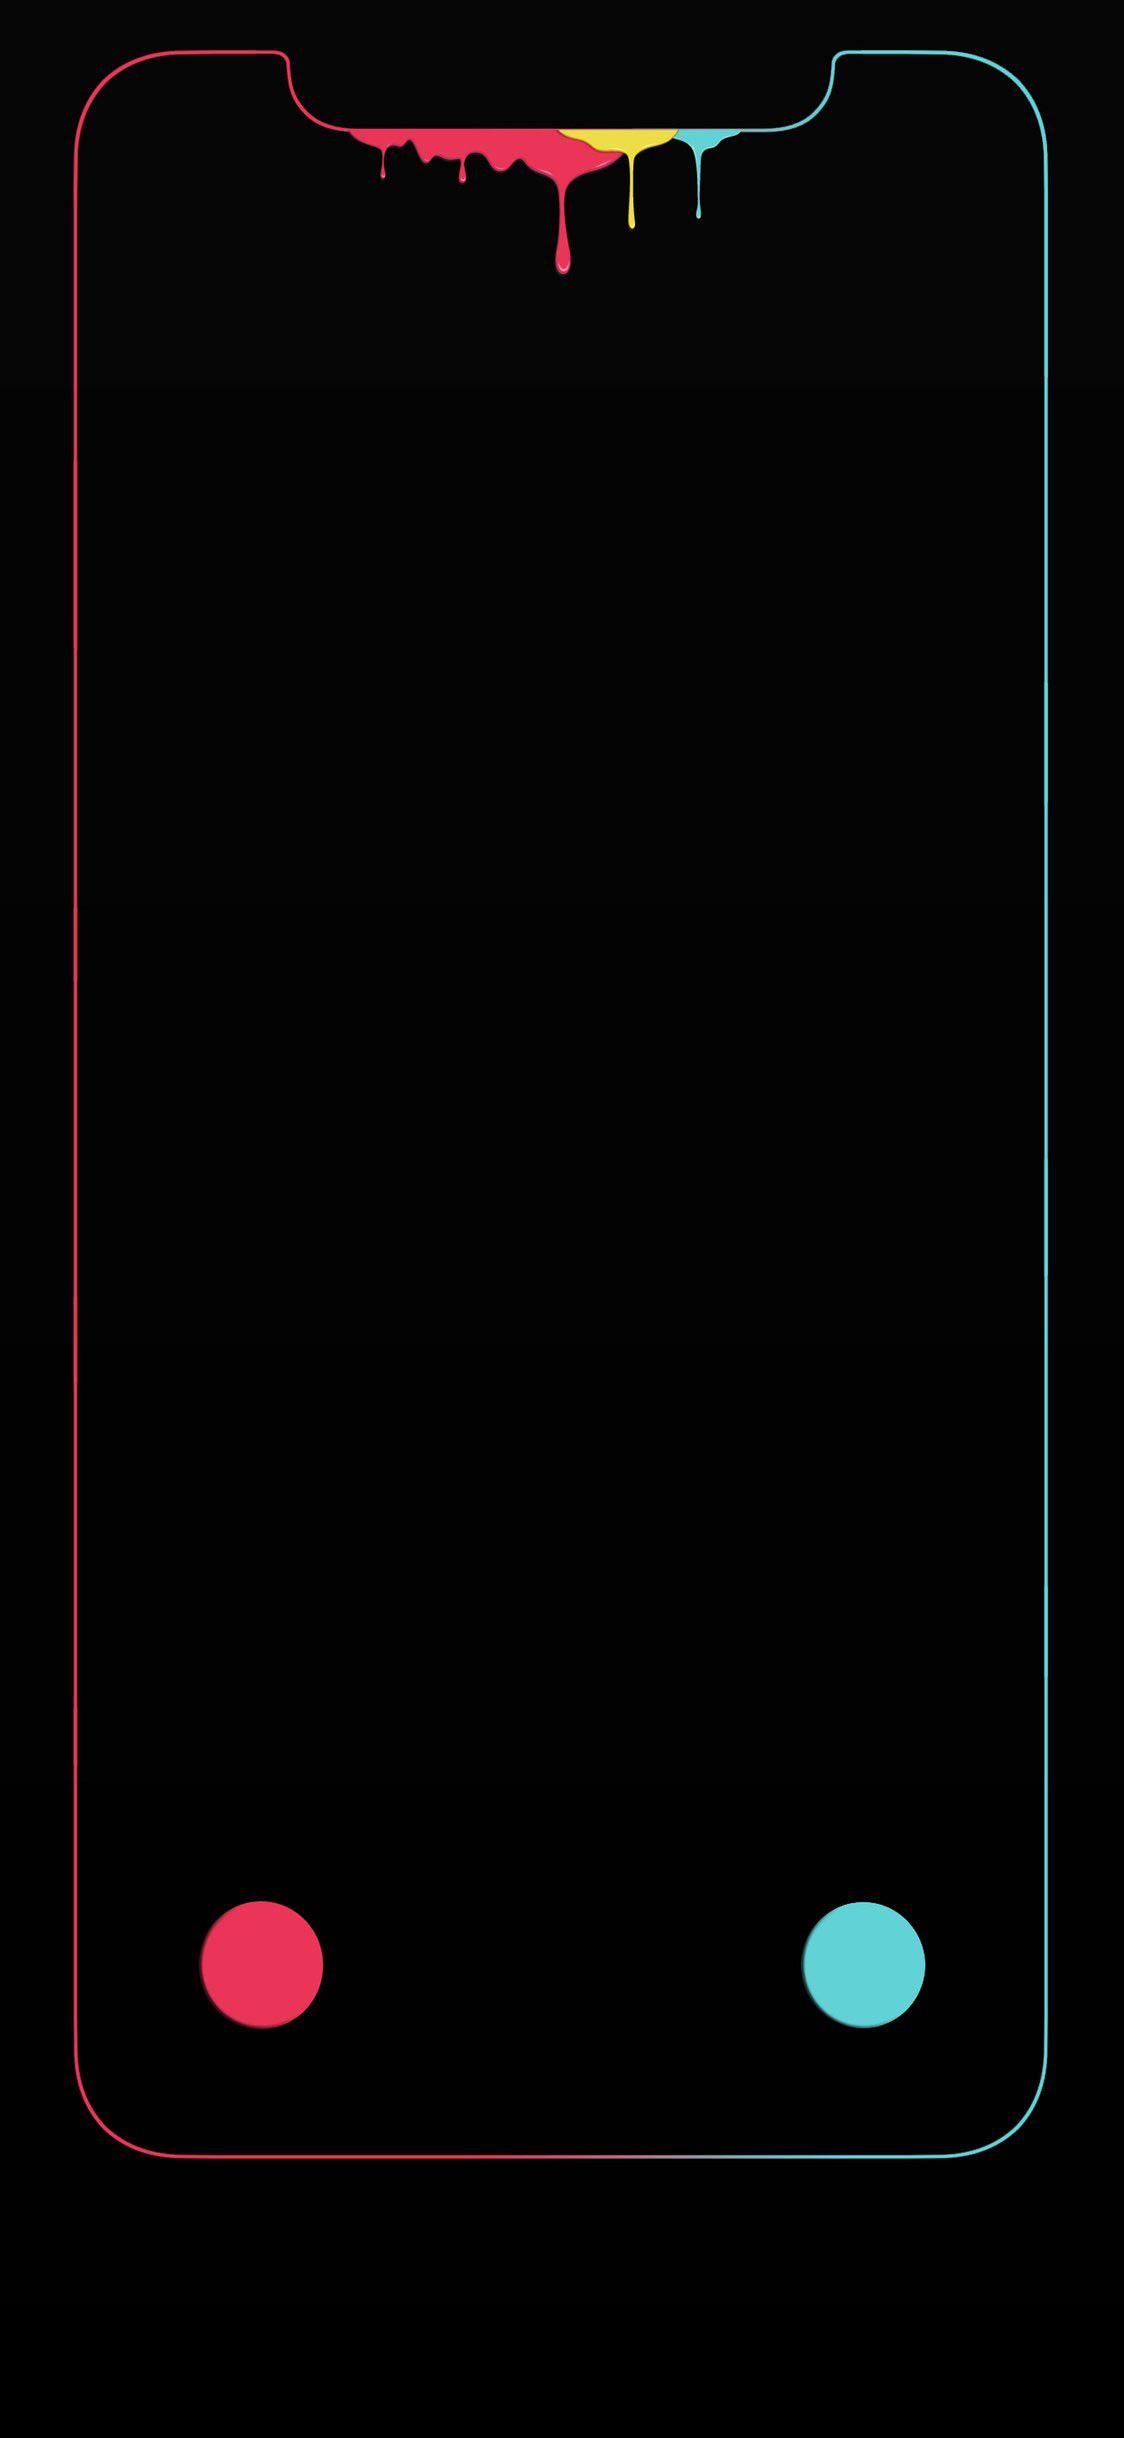 Lock Screen Wallpaper For Iphone Xr